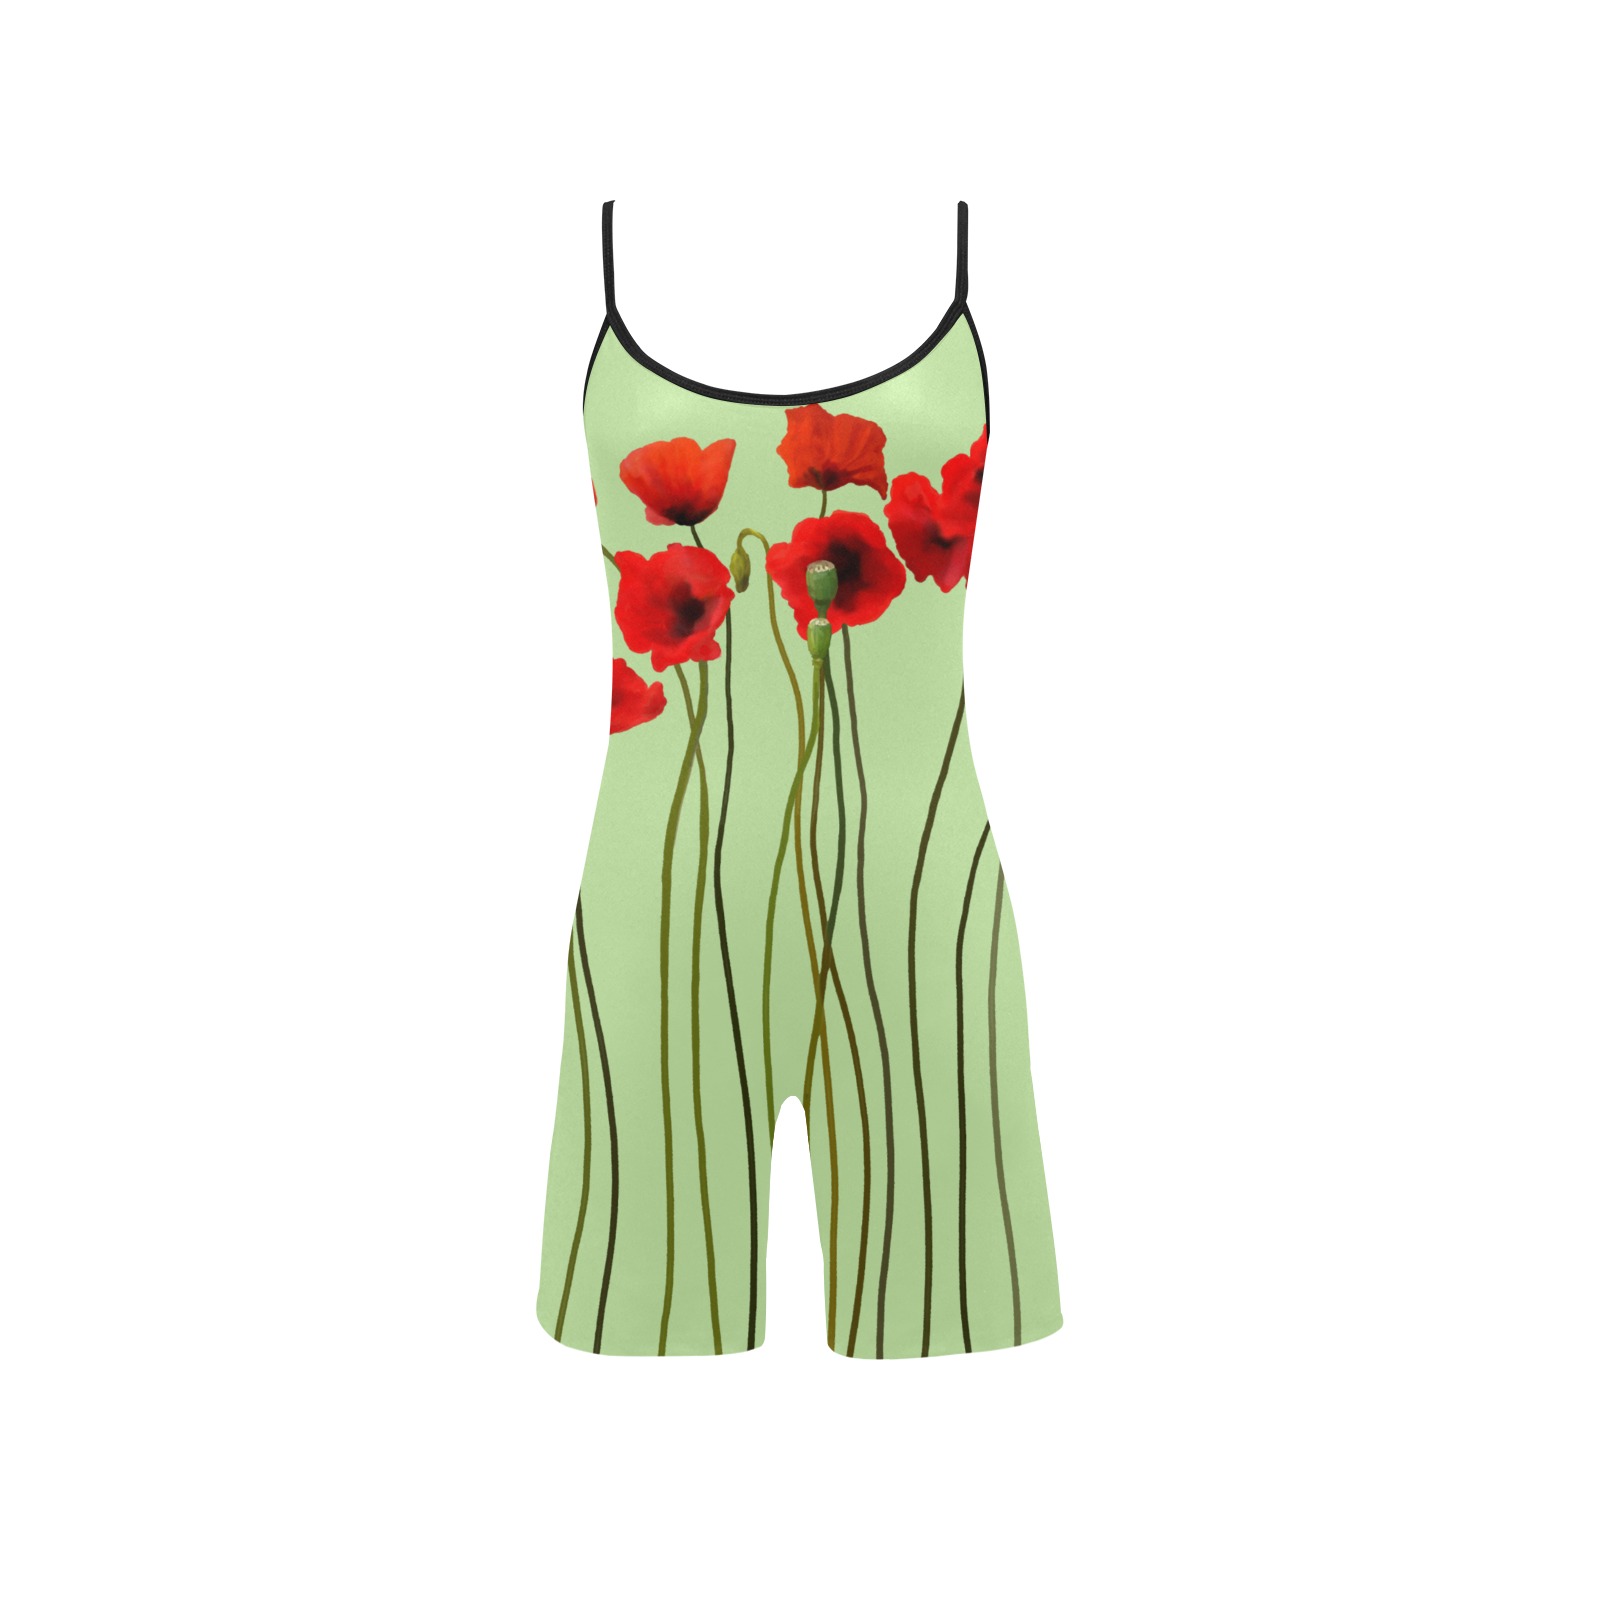 Poppies Floral Design Papaver somniferum on green Women's Short Yoga Bodysuit